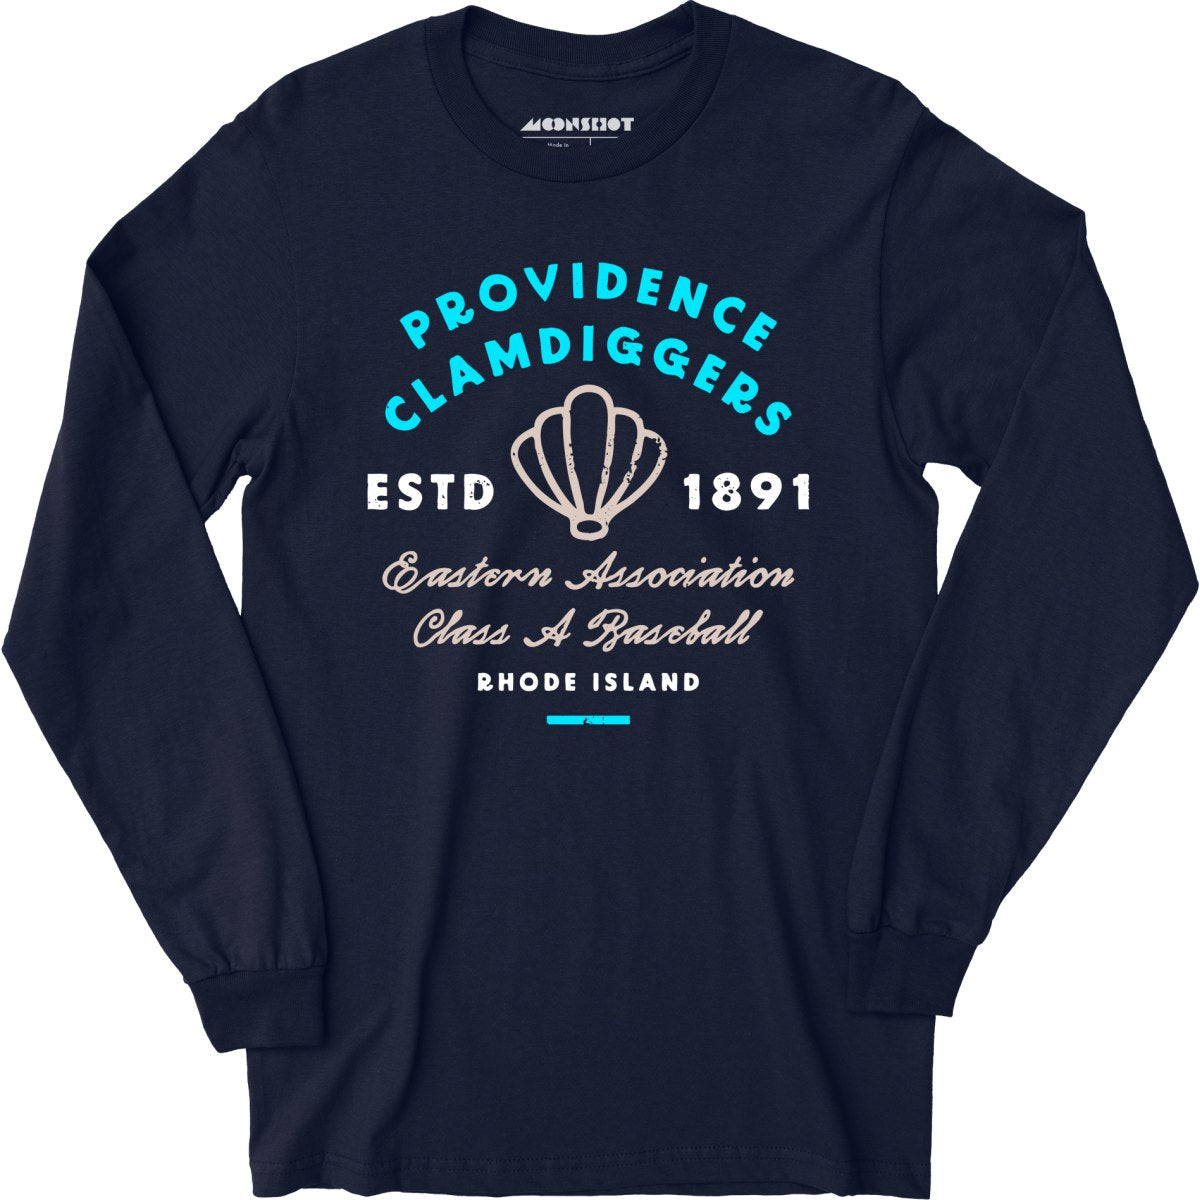 Providence Clamdiggers - Rhode Island - Vintage Defunct Baseball Teams - Long Sleeve T-Shirt